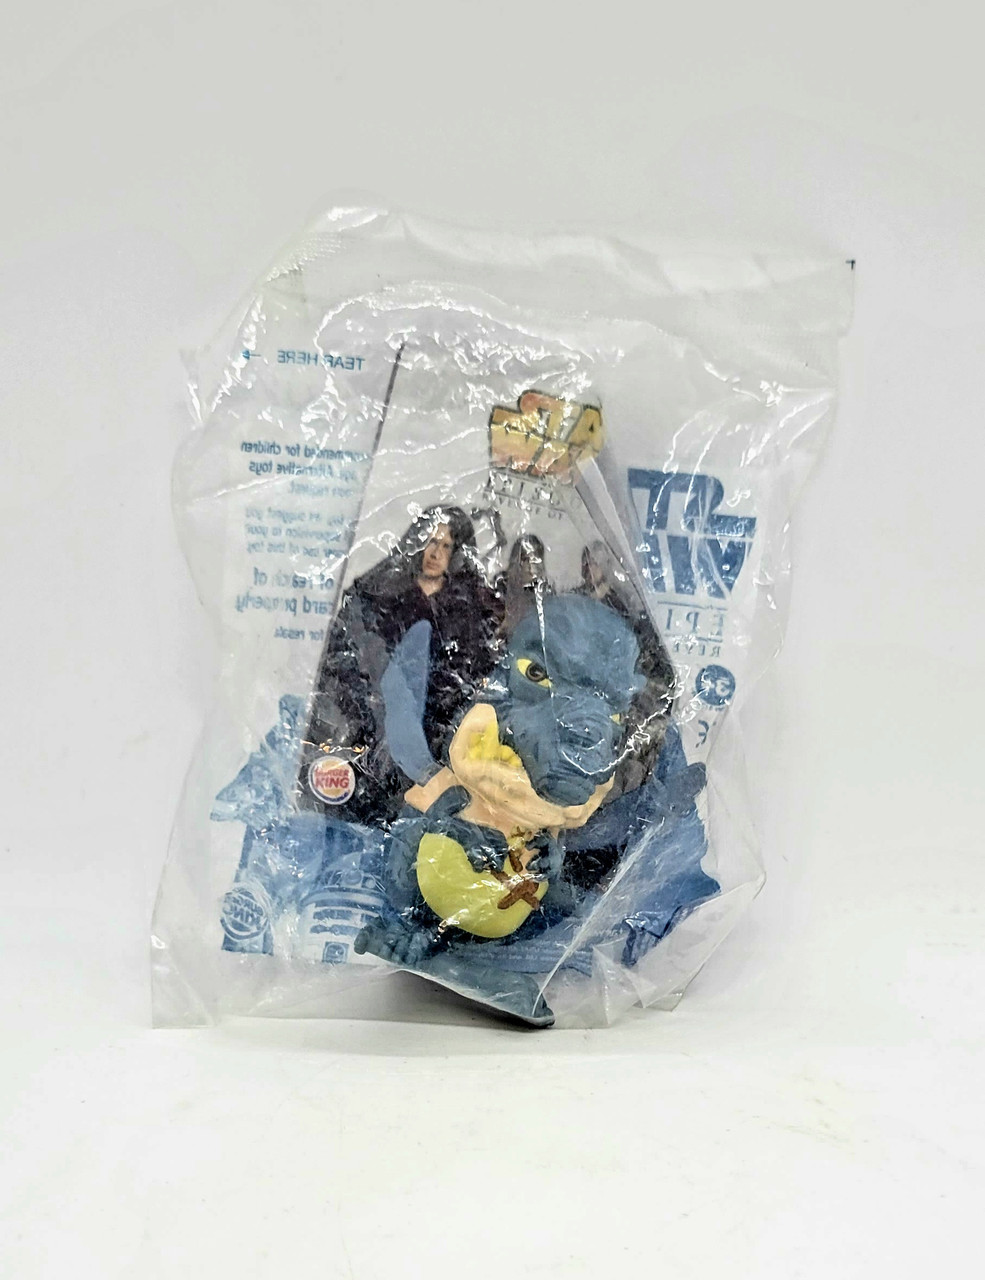 Star Wars Episode 3 Kit Fisto Burger King Toy Collectible Memorabilia